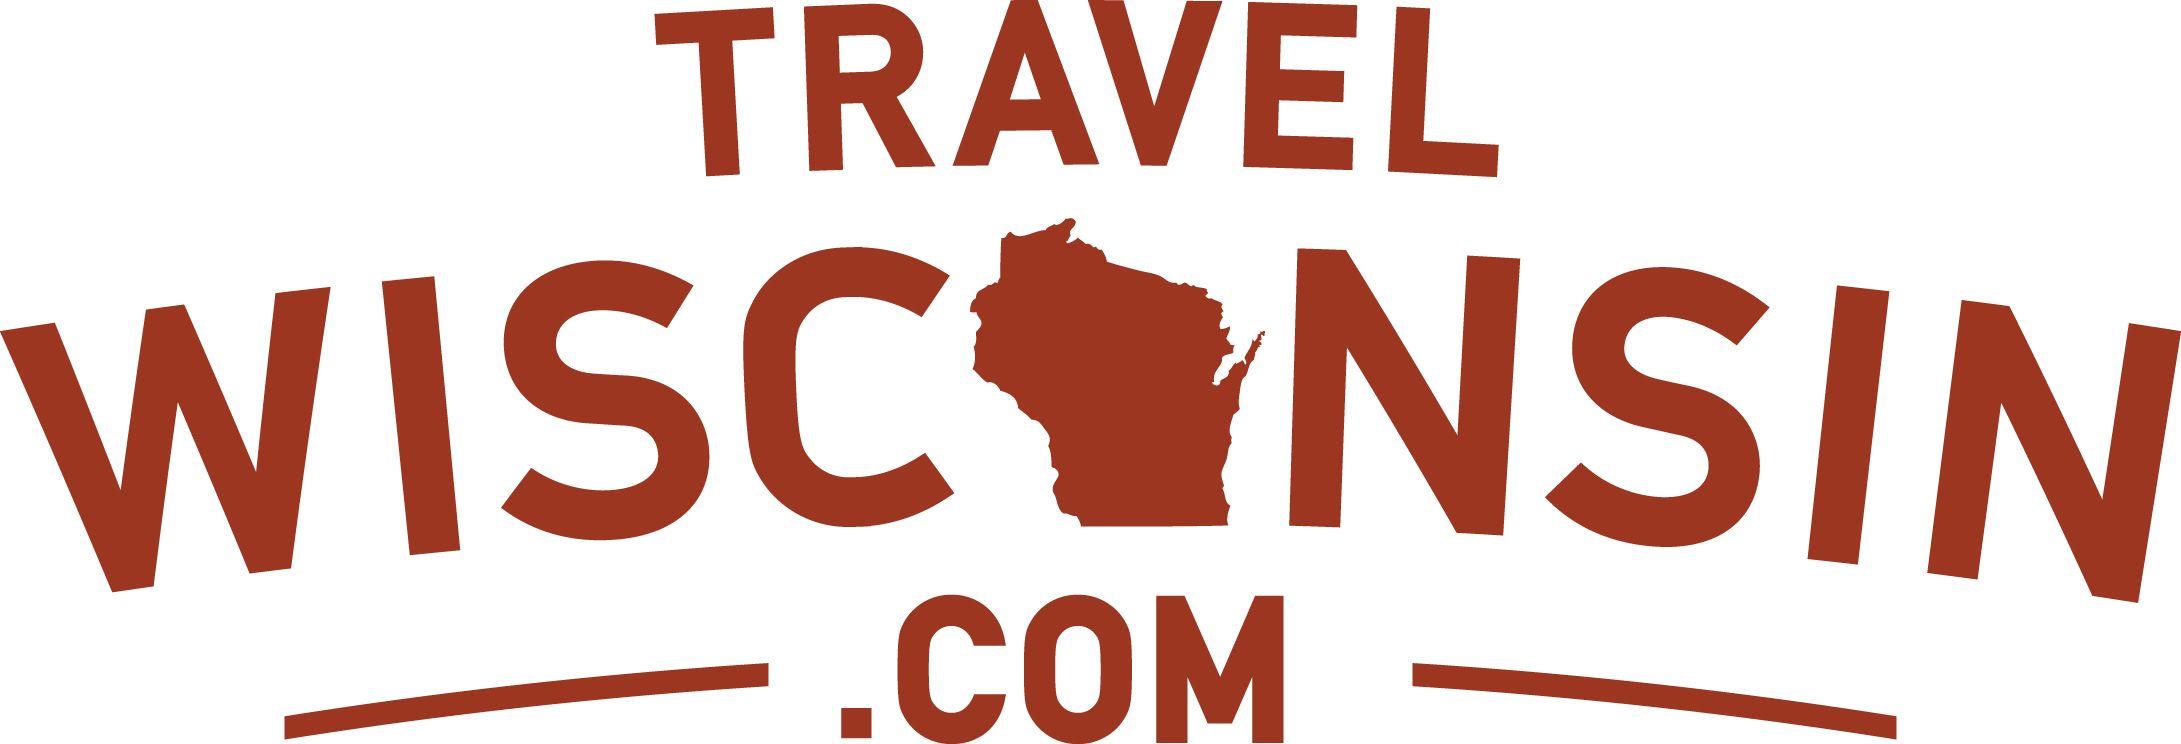 Wisconson Logo - Travel Wisconsin Logo Files | Travel Wisconsin